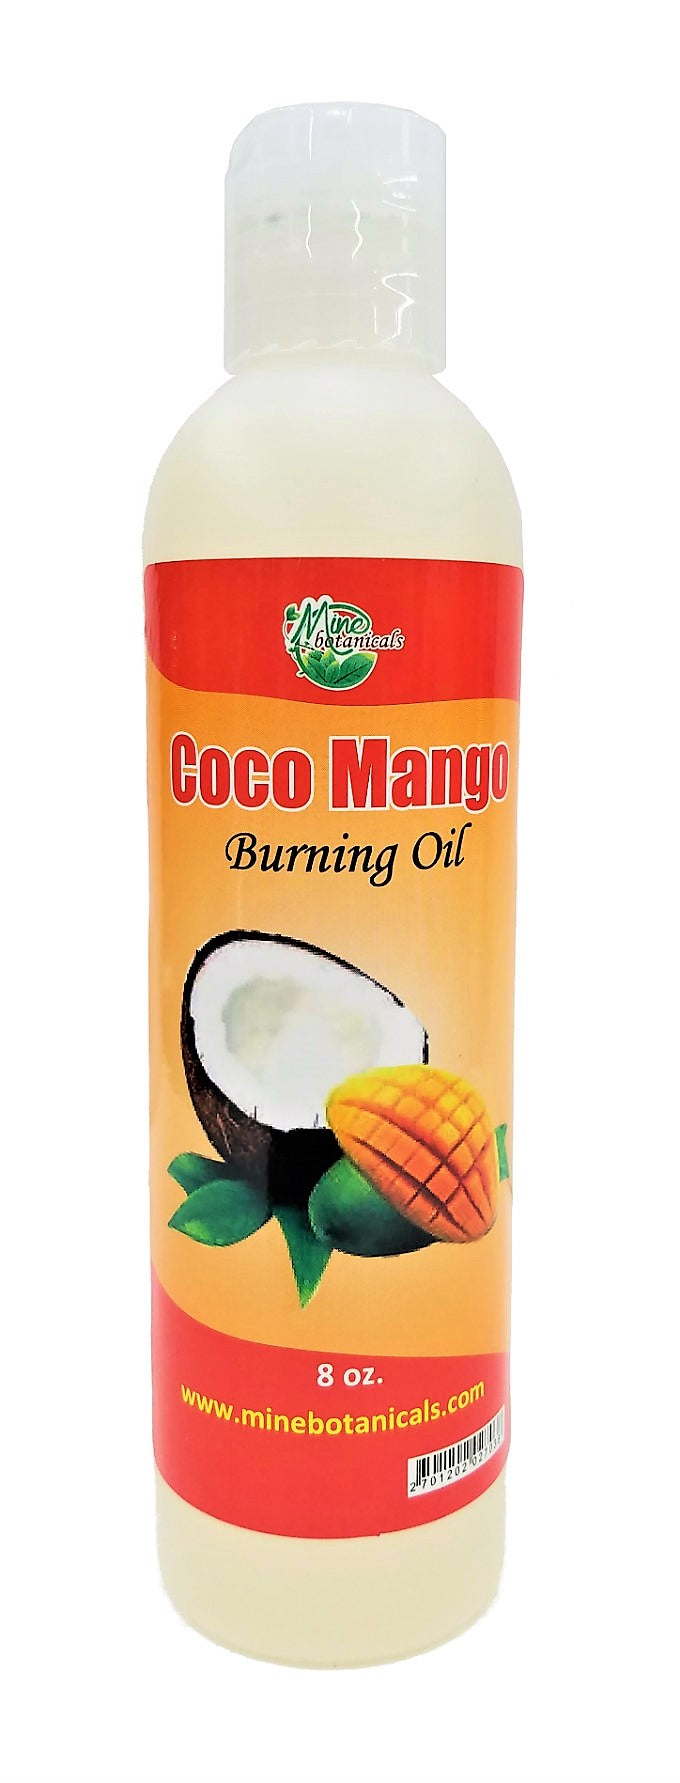 Coco Mango Burning Oil